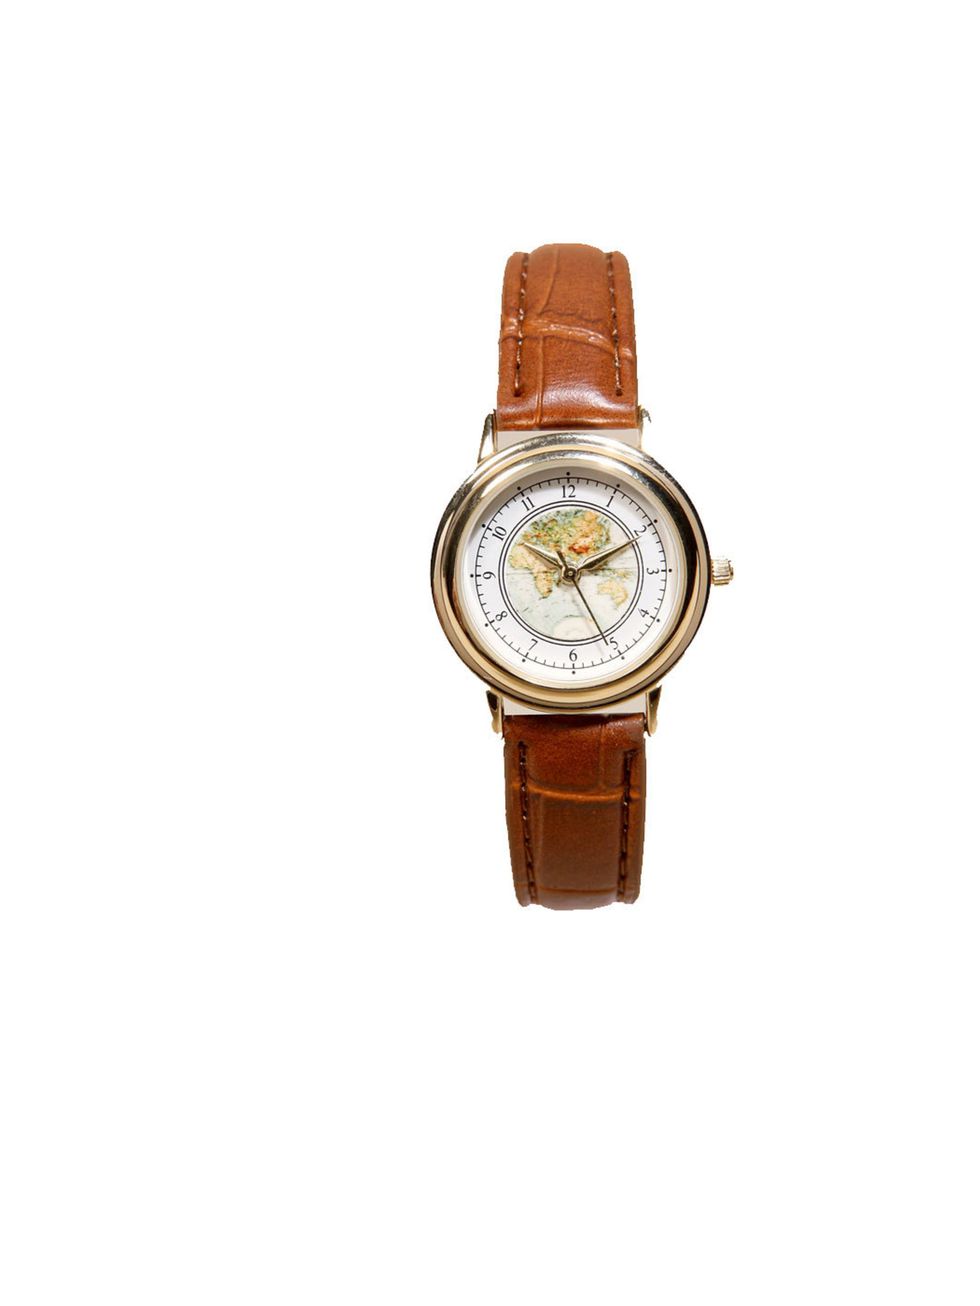 <p><a href="http://www.urbanoutfitters.co.uk/globe-medium-face-leather-watch/invt/5769461489132/&amp;bklist=?VBMST=watch">Urban Outfitters</a> globe watch, £26 </p>